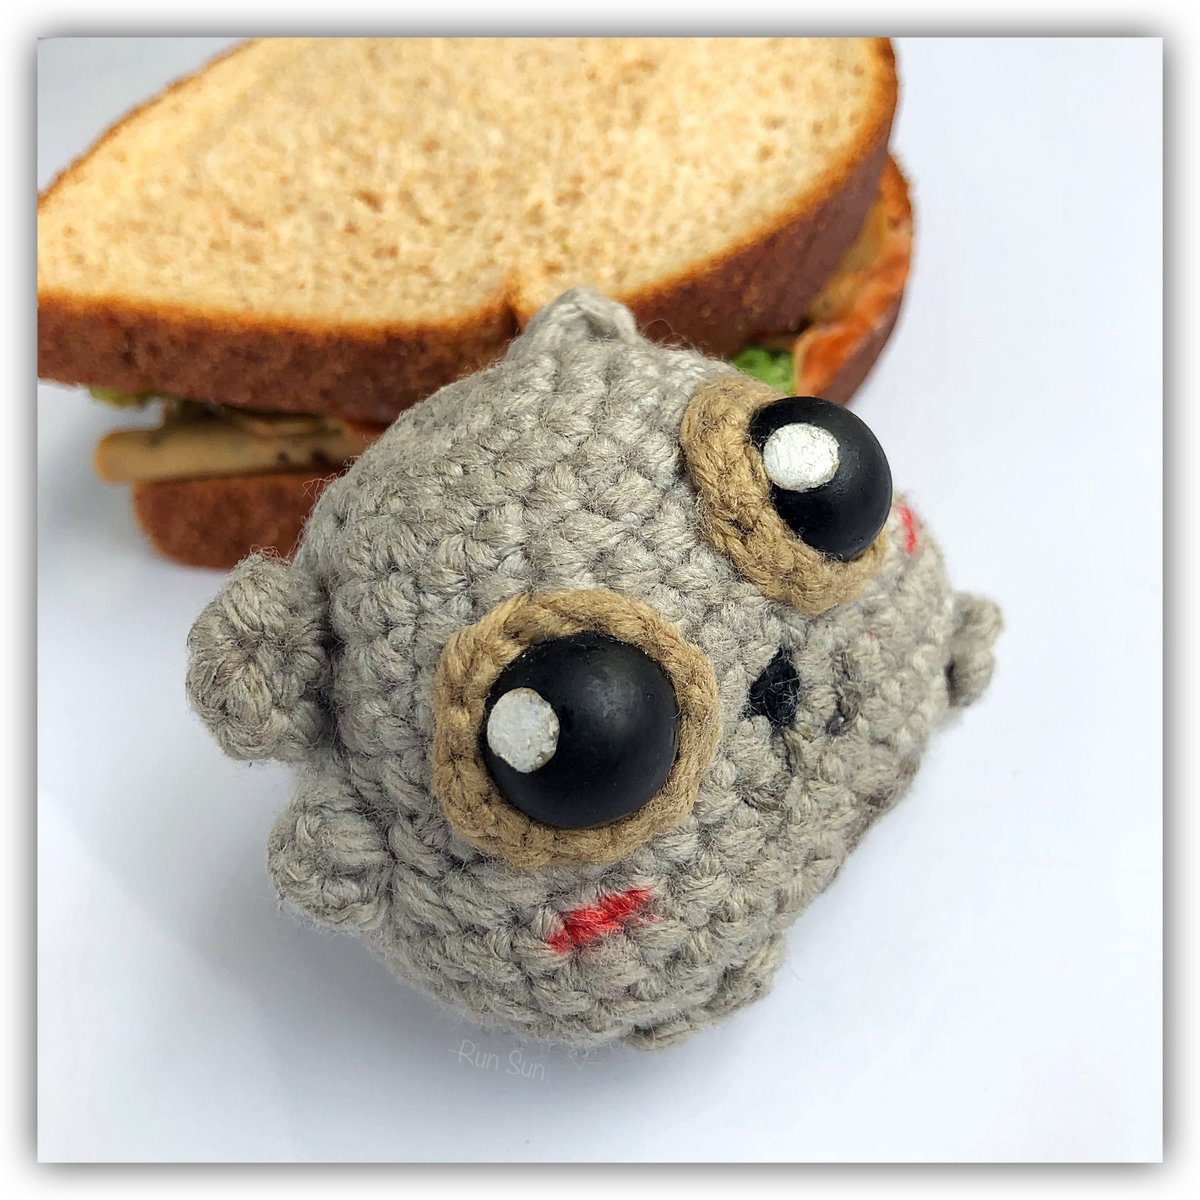 Sandwich time! 🐹🥪⏰
#cute #hamster #animation #runsun #2Danimation #art #positivity #crochet #vegan #plantbased #foodie #veganfoodie #whatveganseat #bestofvegan #vegansandwich #tbt #tot #Tofurky